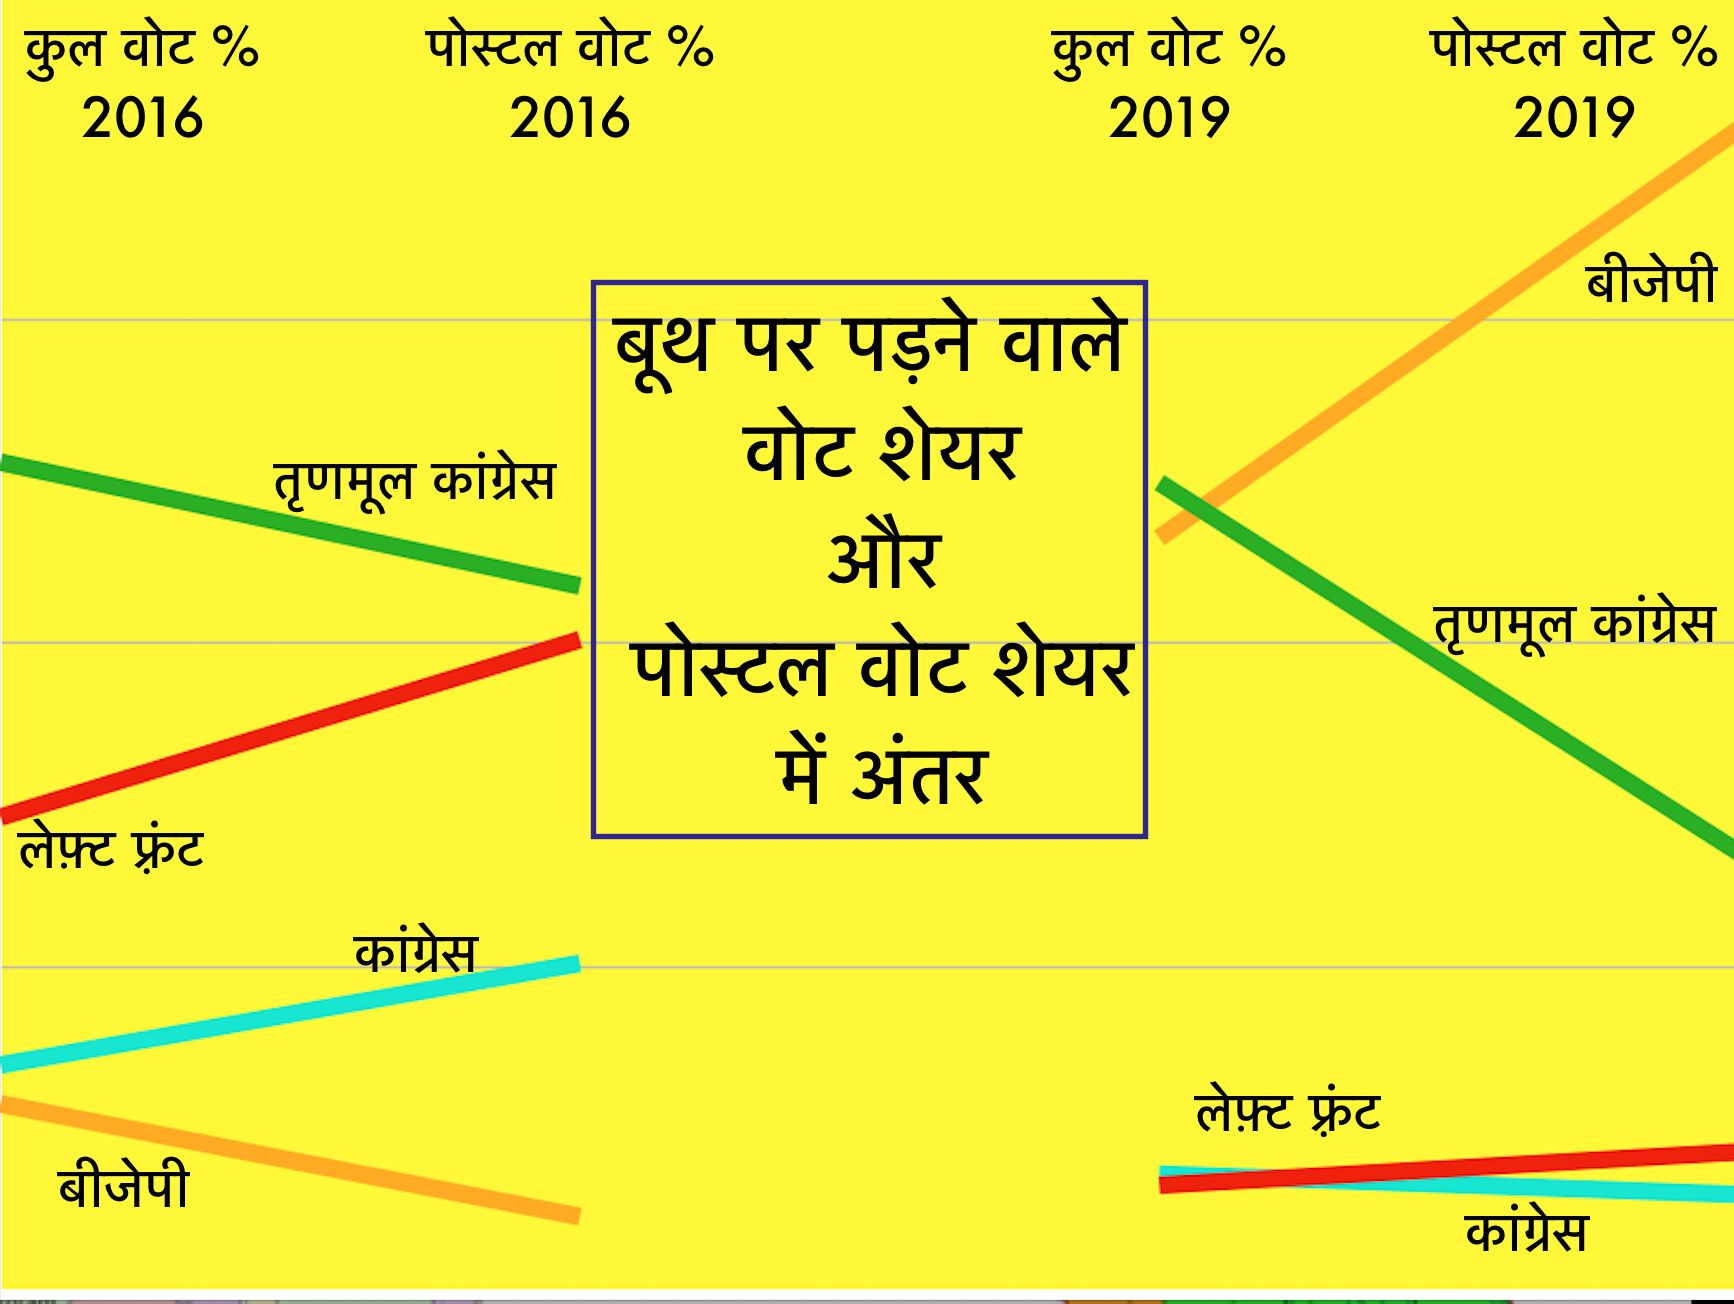 government employees voting pattern in wb polls as trinamool congress mamta seek third term - Satya Hindi